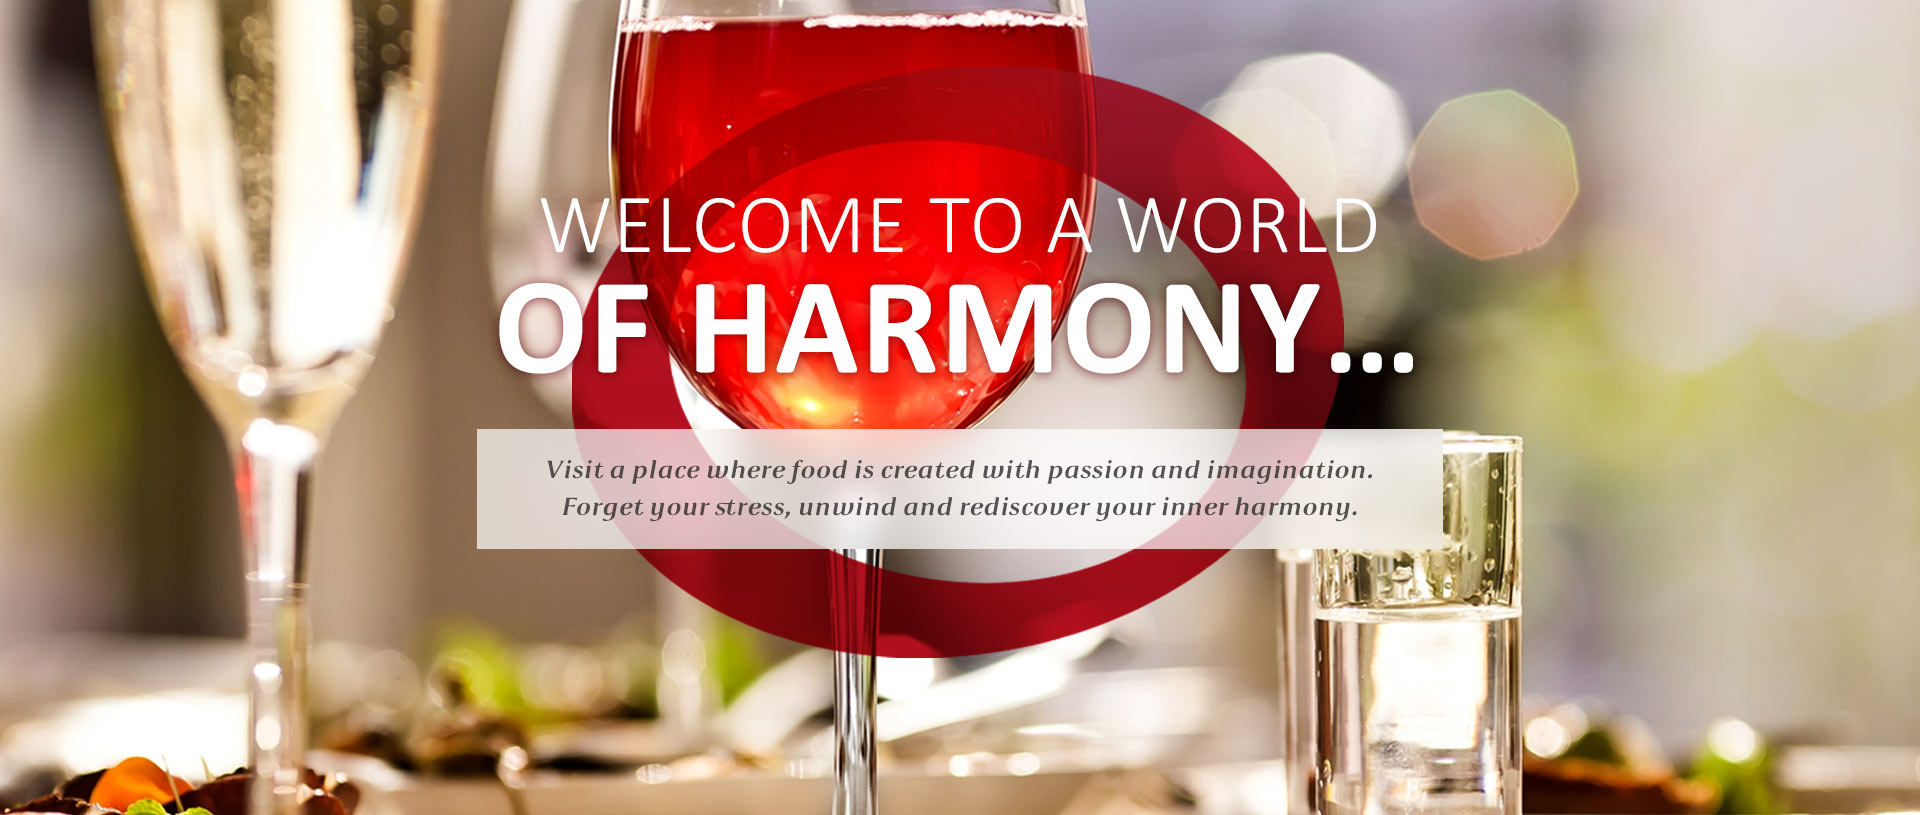 Harmony Restaurant - Third slider image